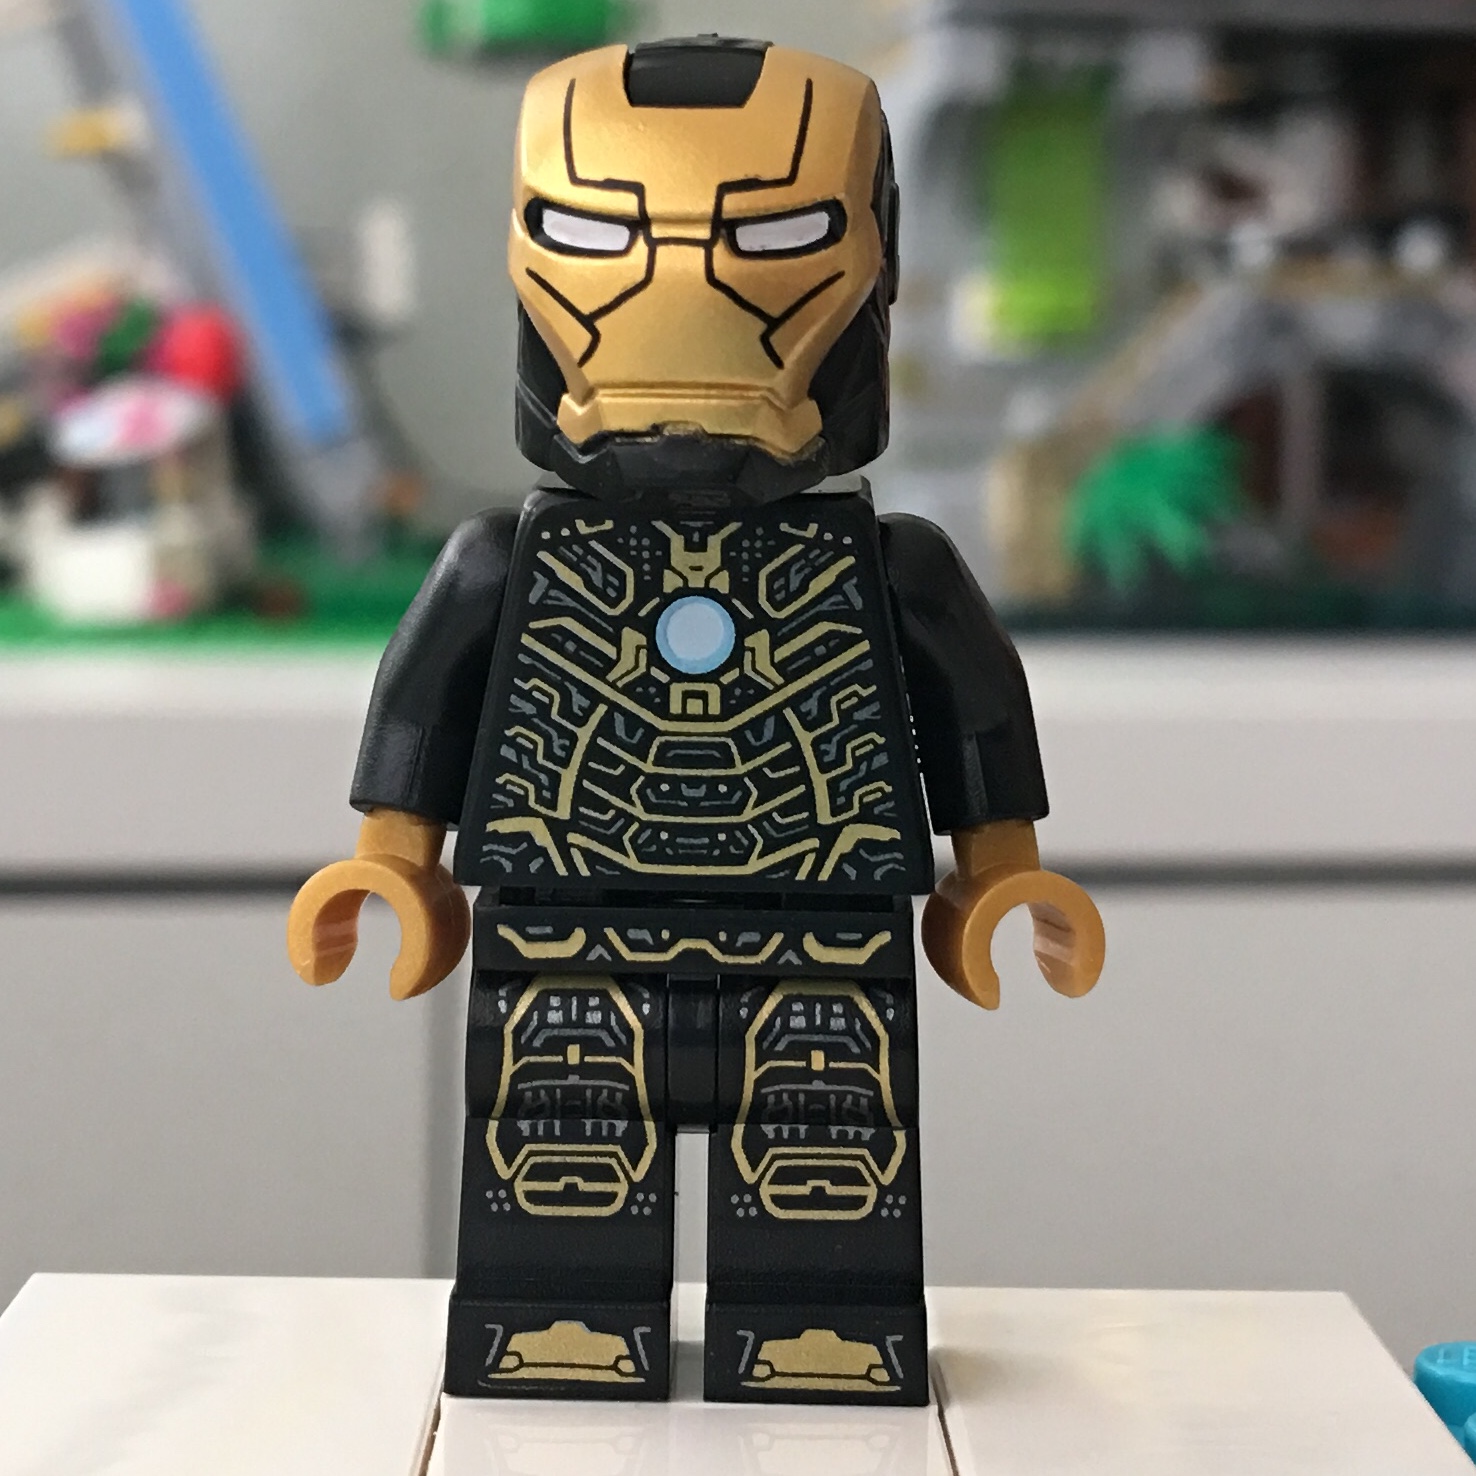 Minifigure from set 76125 NEW Iron Man MK 41 LEGO Marvel Avengers Endgame 